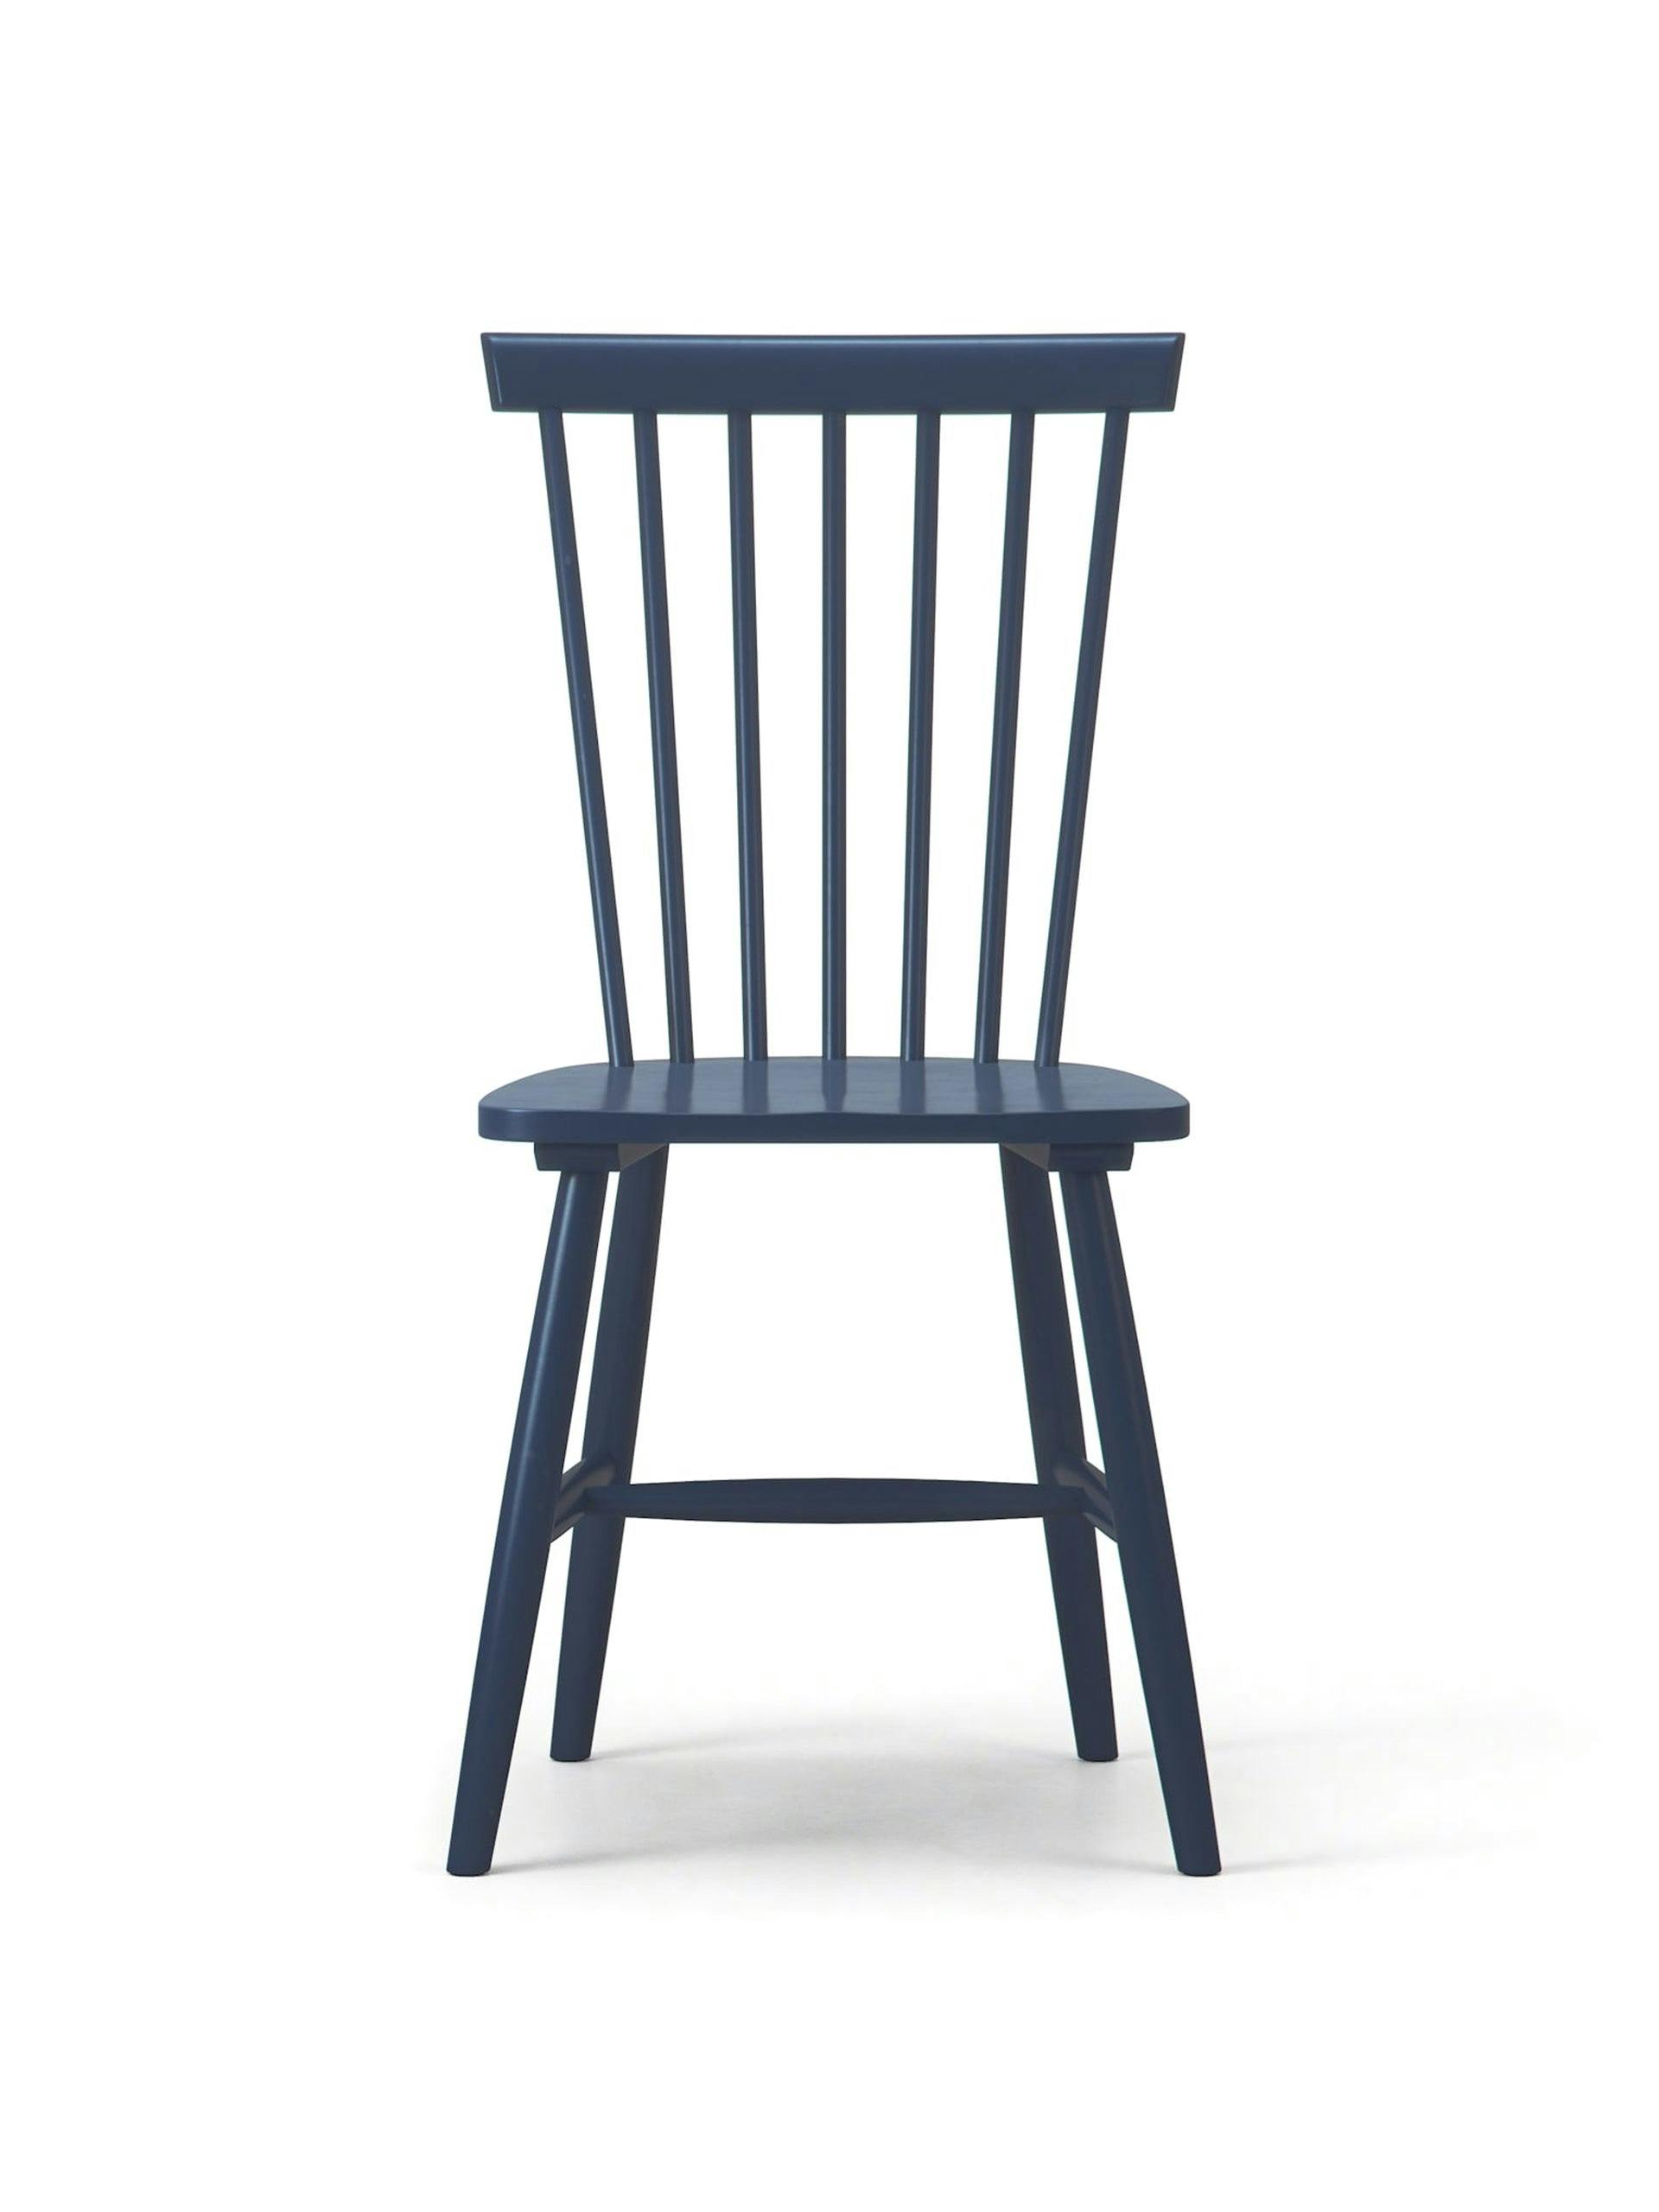 Beech chair in dark blue